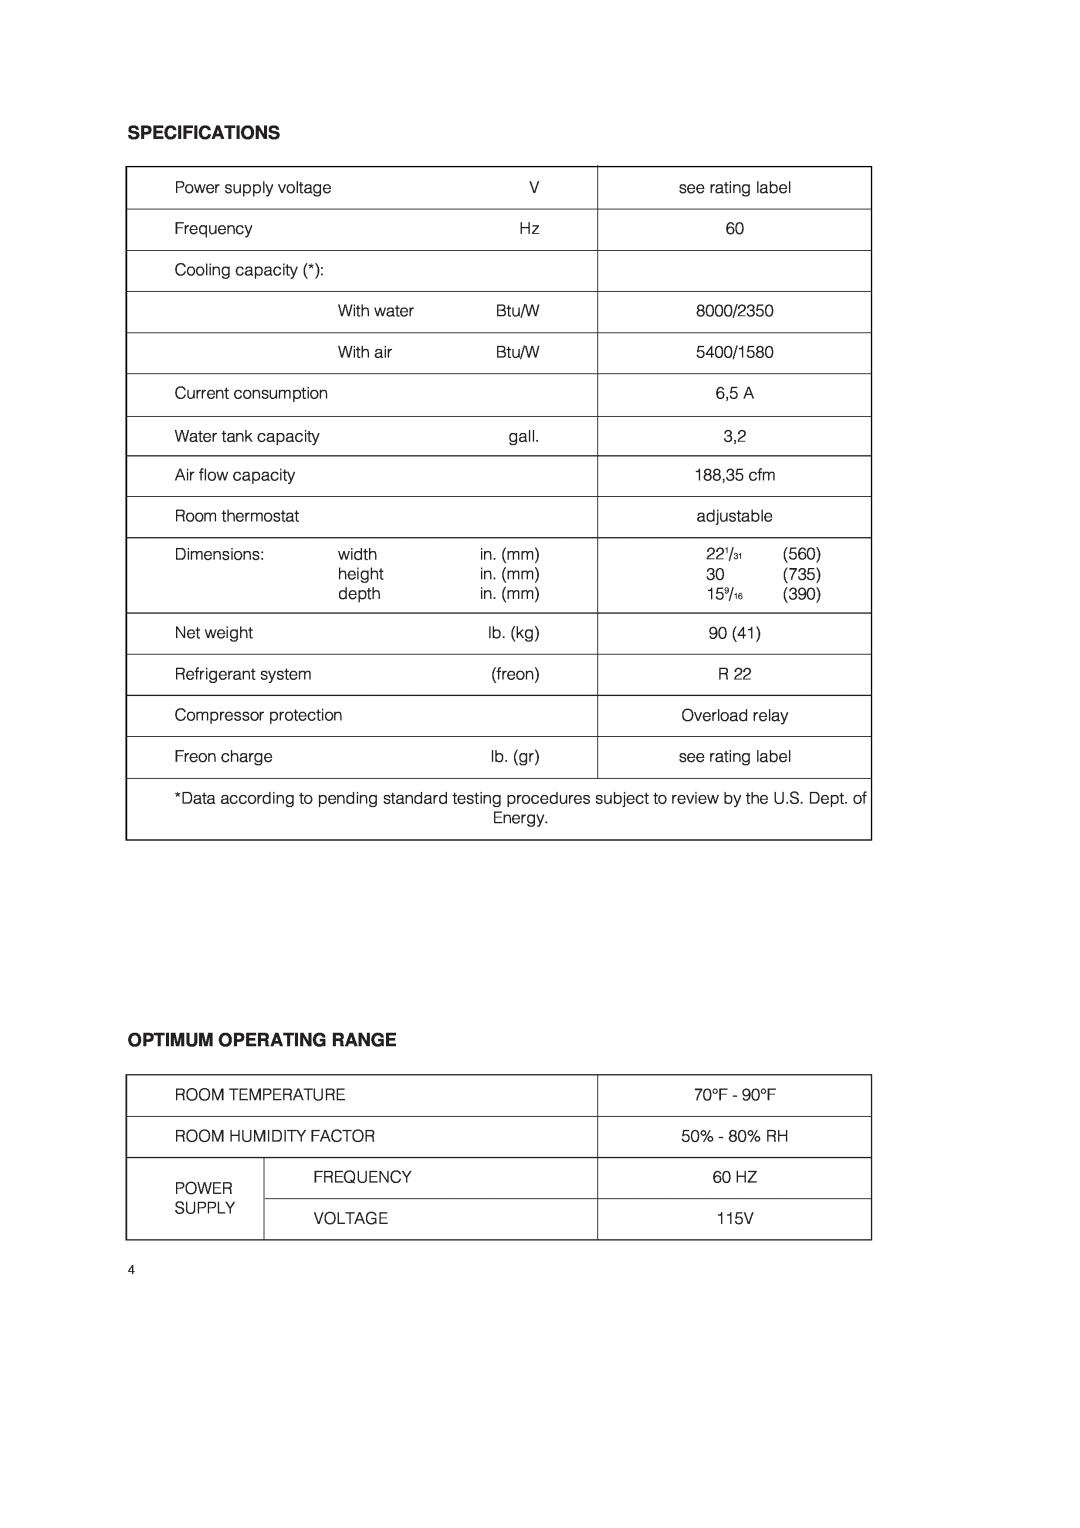 DeLonghi PAC 250 U owner manual Specifications, Optimum Operating Range 